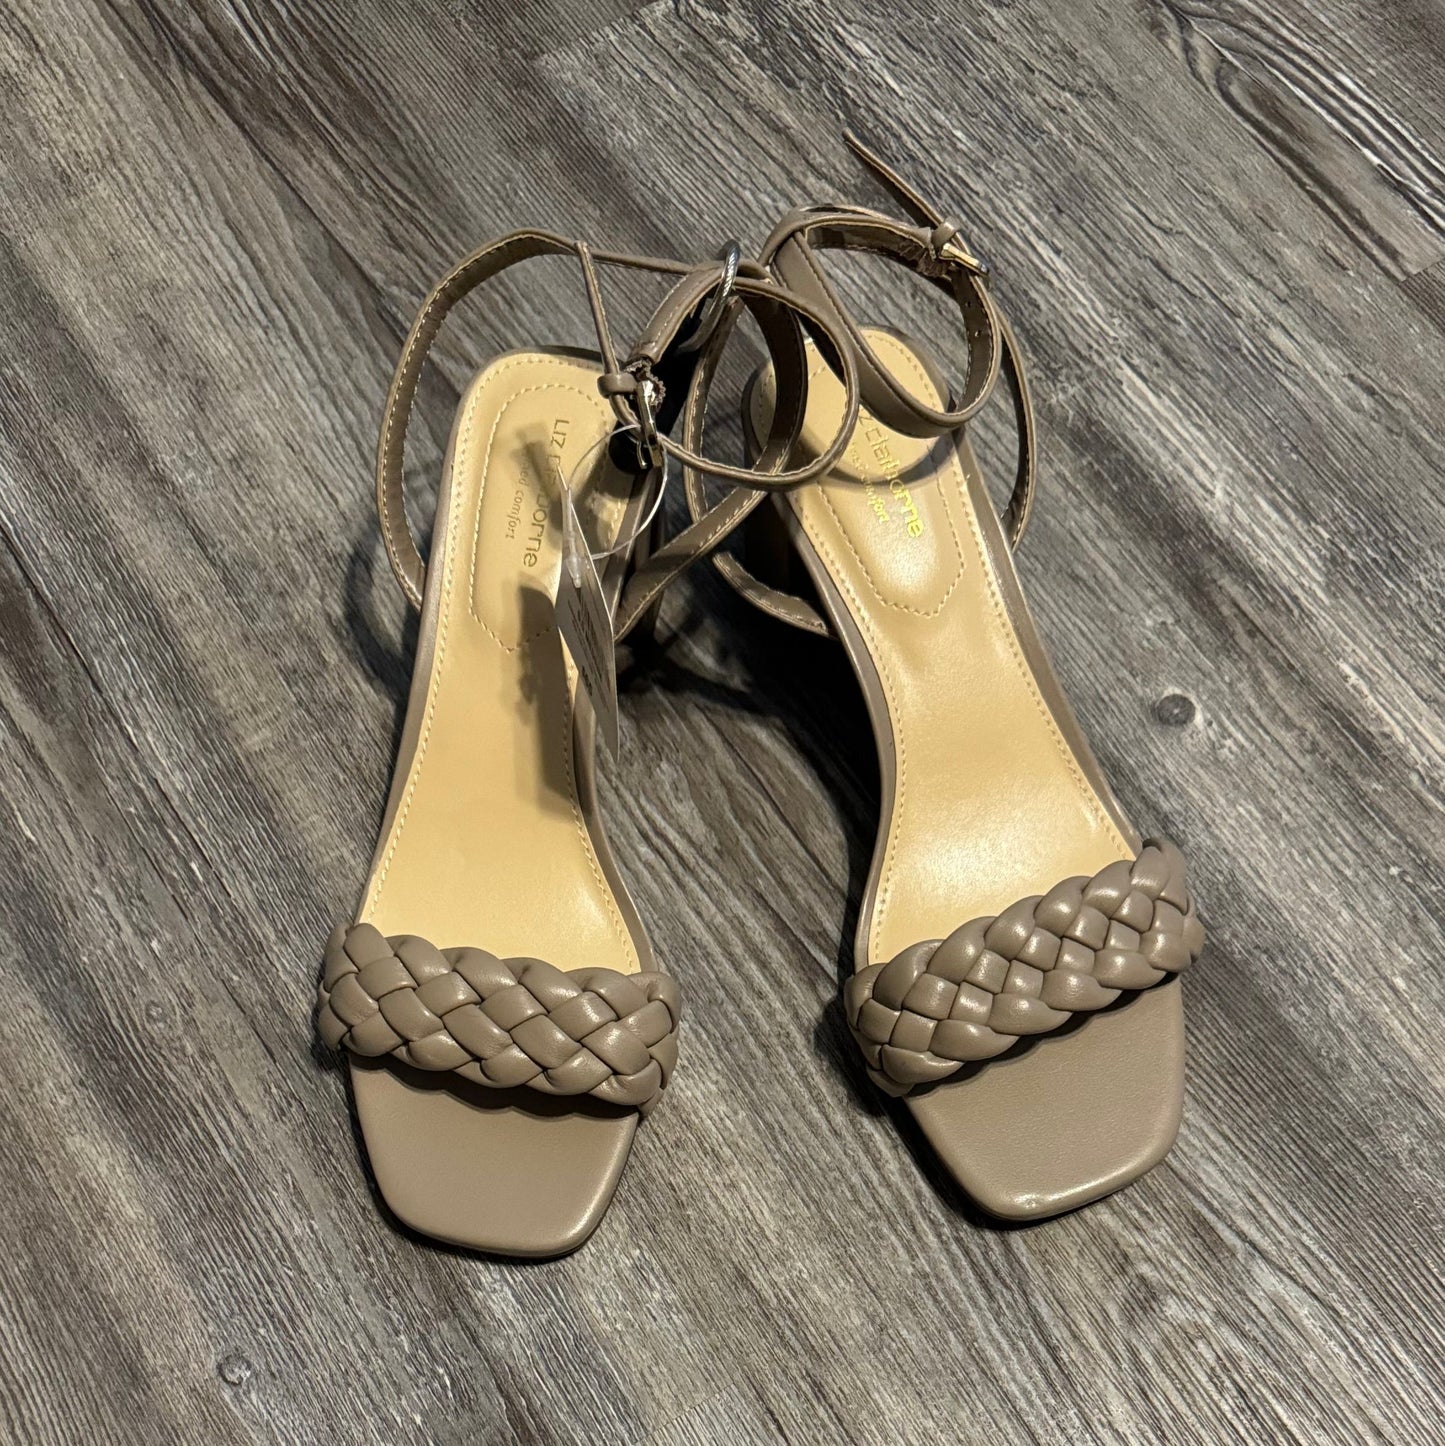 Sandals Heels Block By Liz Claiborne  Size: 6.5